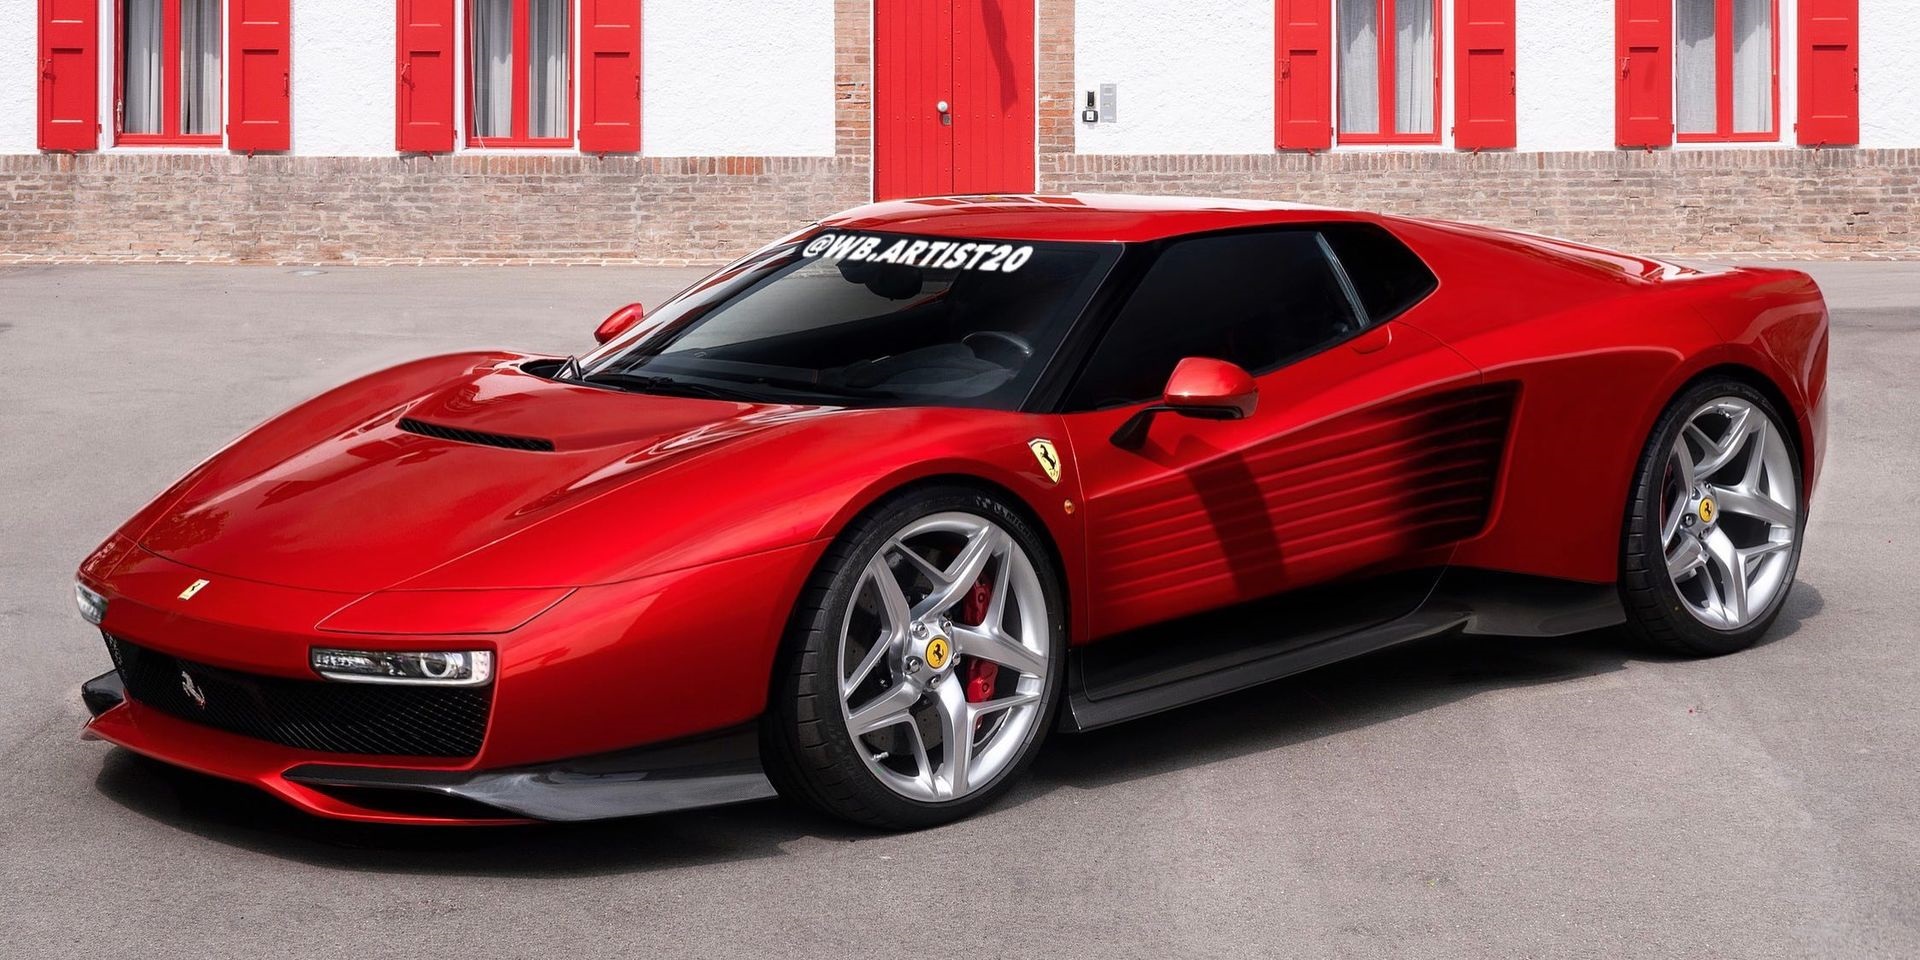 Contemporary Ferrari Testarossa Rendering Keeps the PopUp Lights, Door